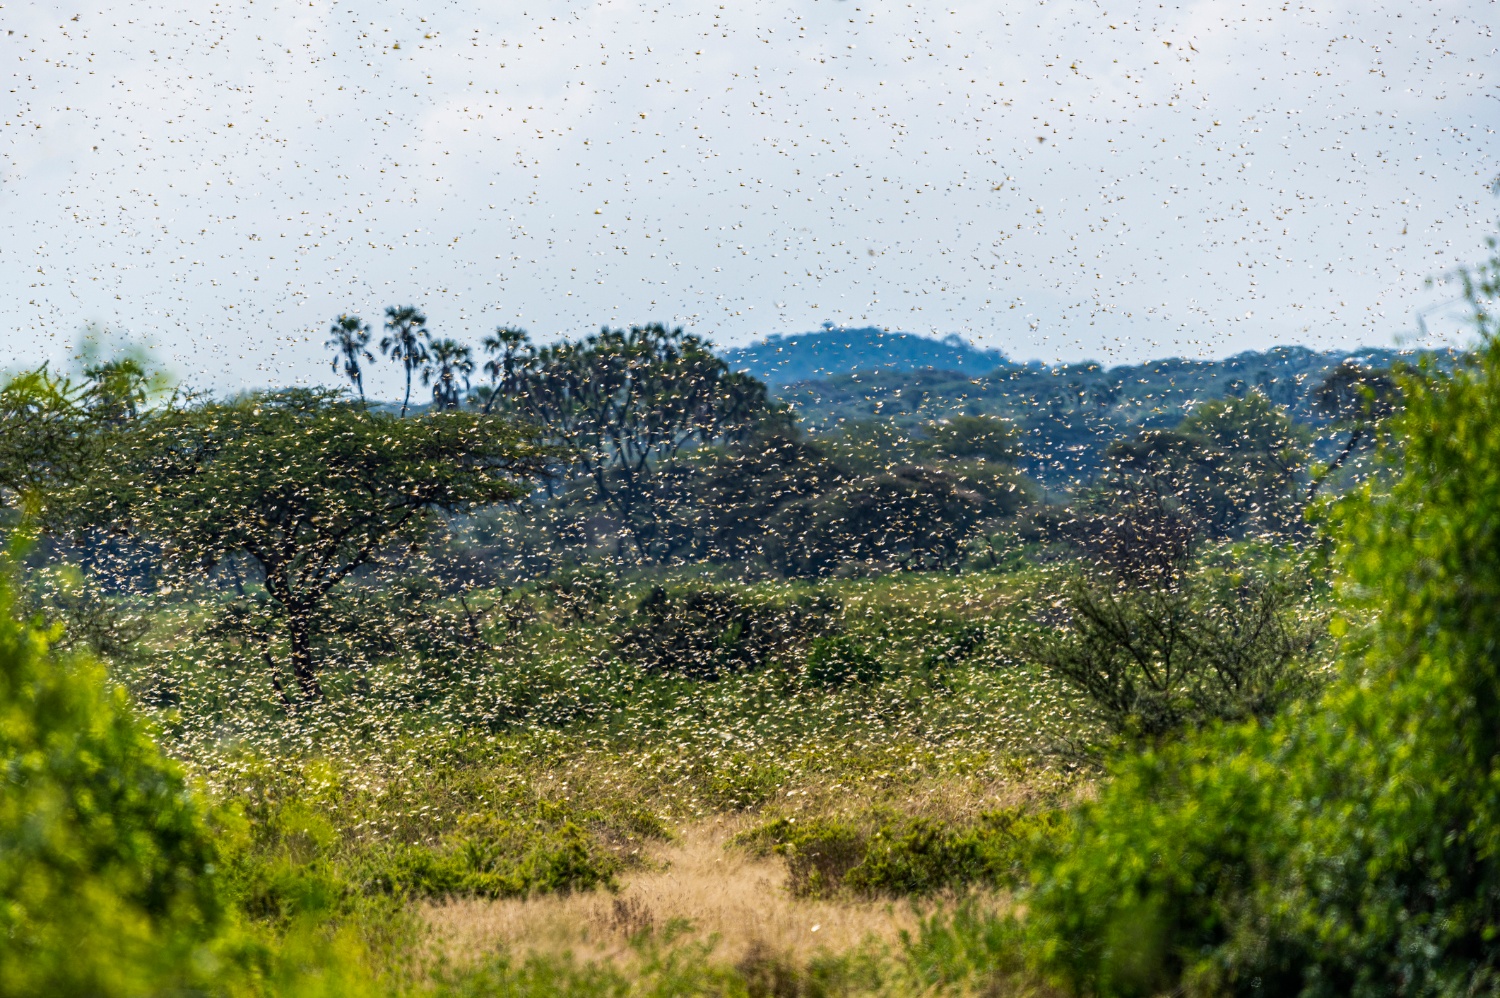 Desert locust monitoring in East-Africa